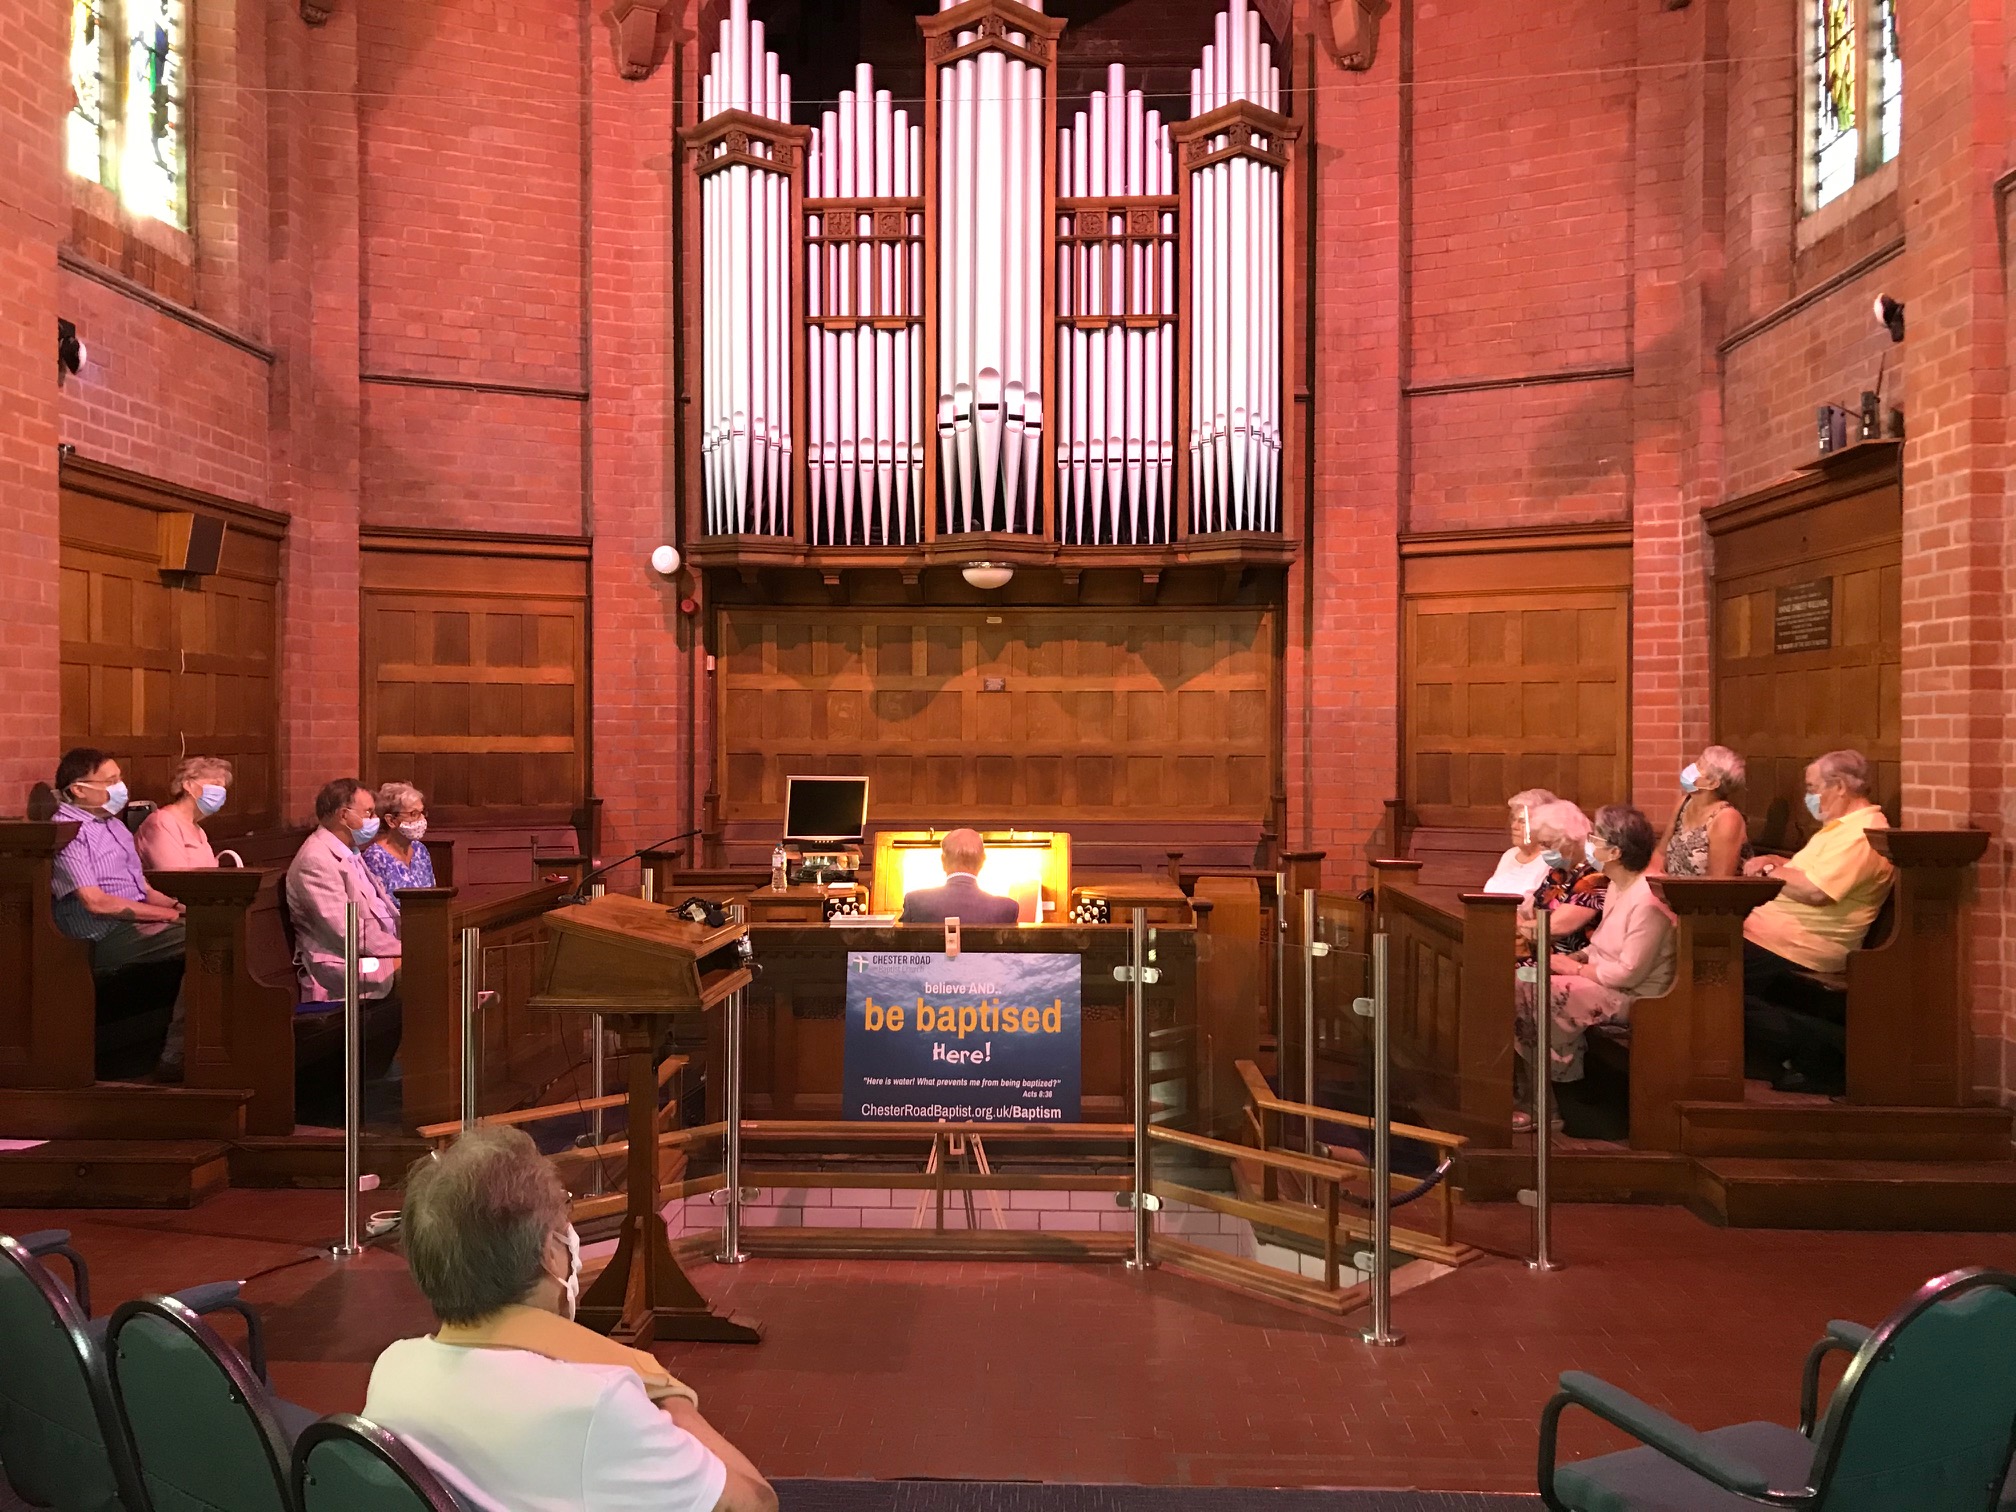 Rejoice 6pm service meets around the organ